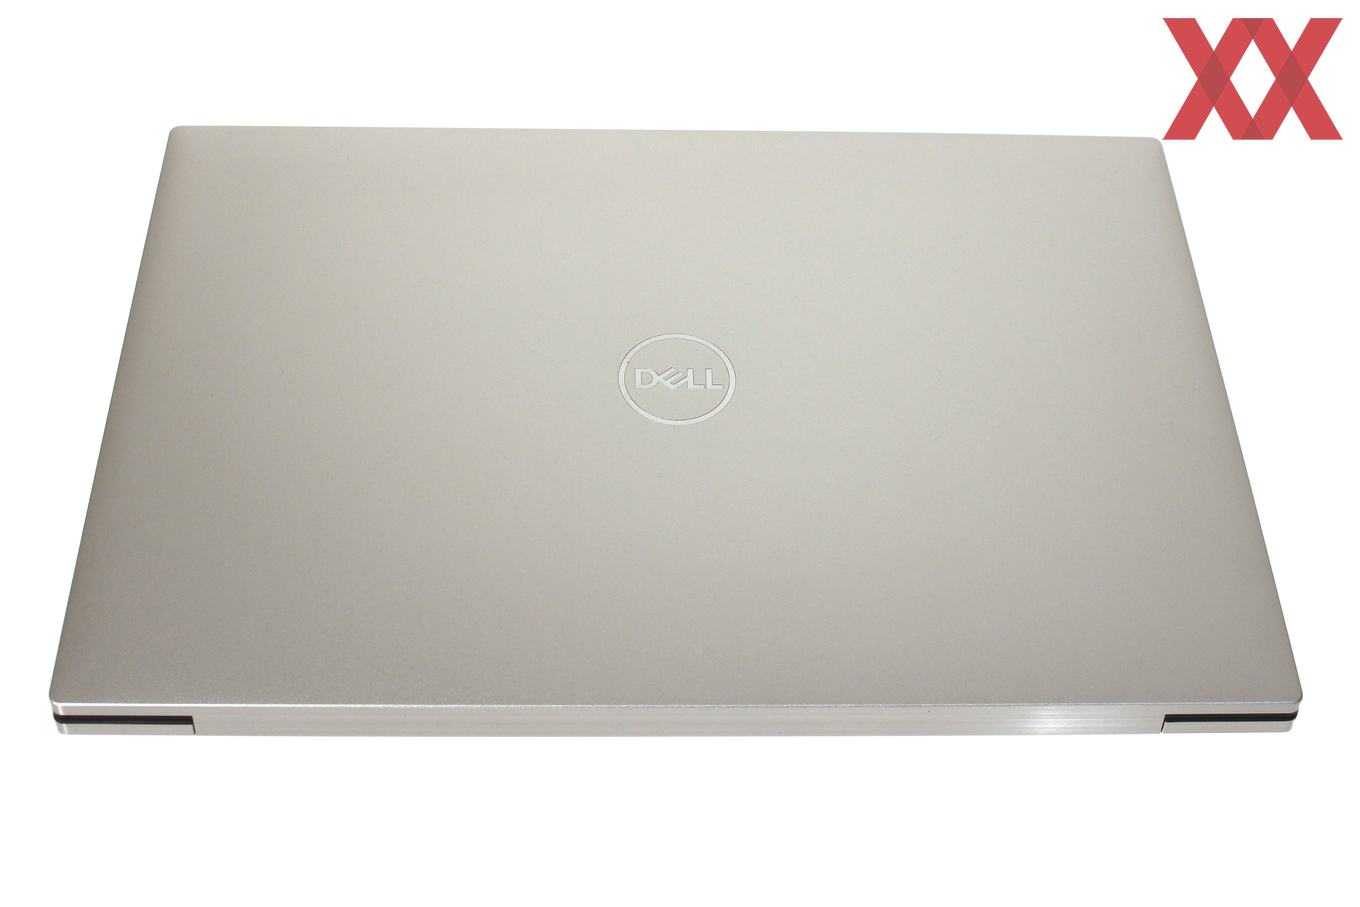 Dell xps 10: описание, технические характеристики, сравнение, возможности